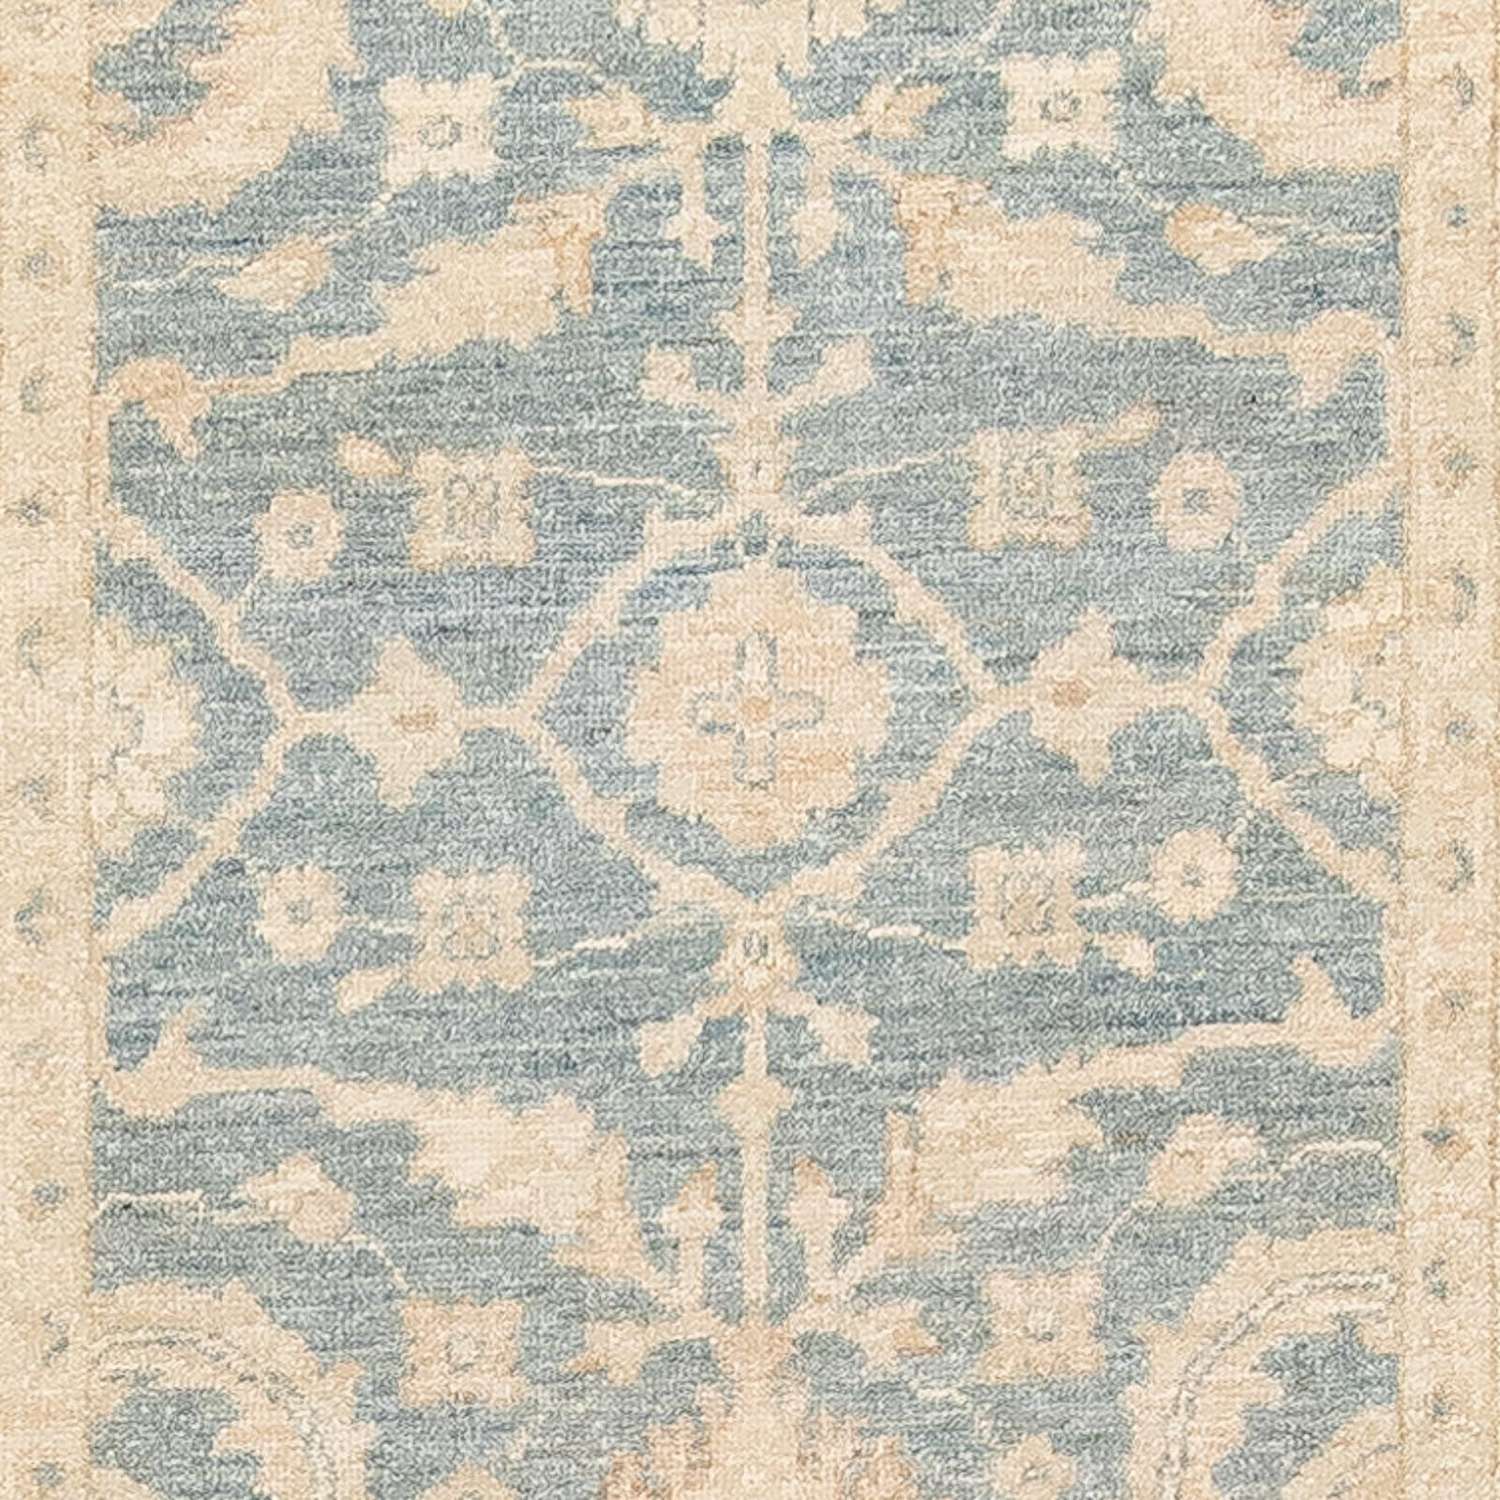 Loper Ziegler tapijt - 300 x 80 cm - lichtblauw